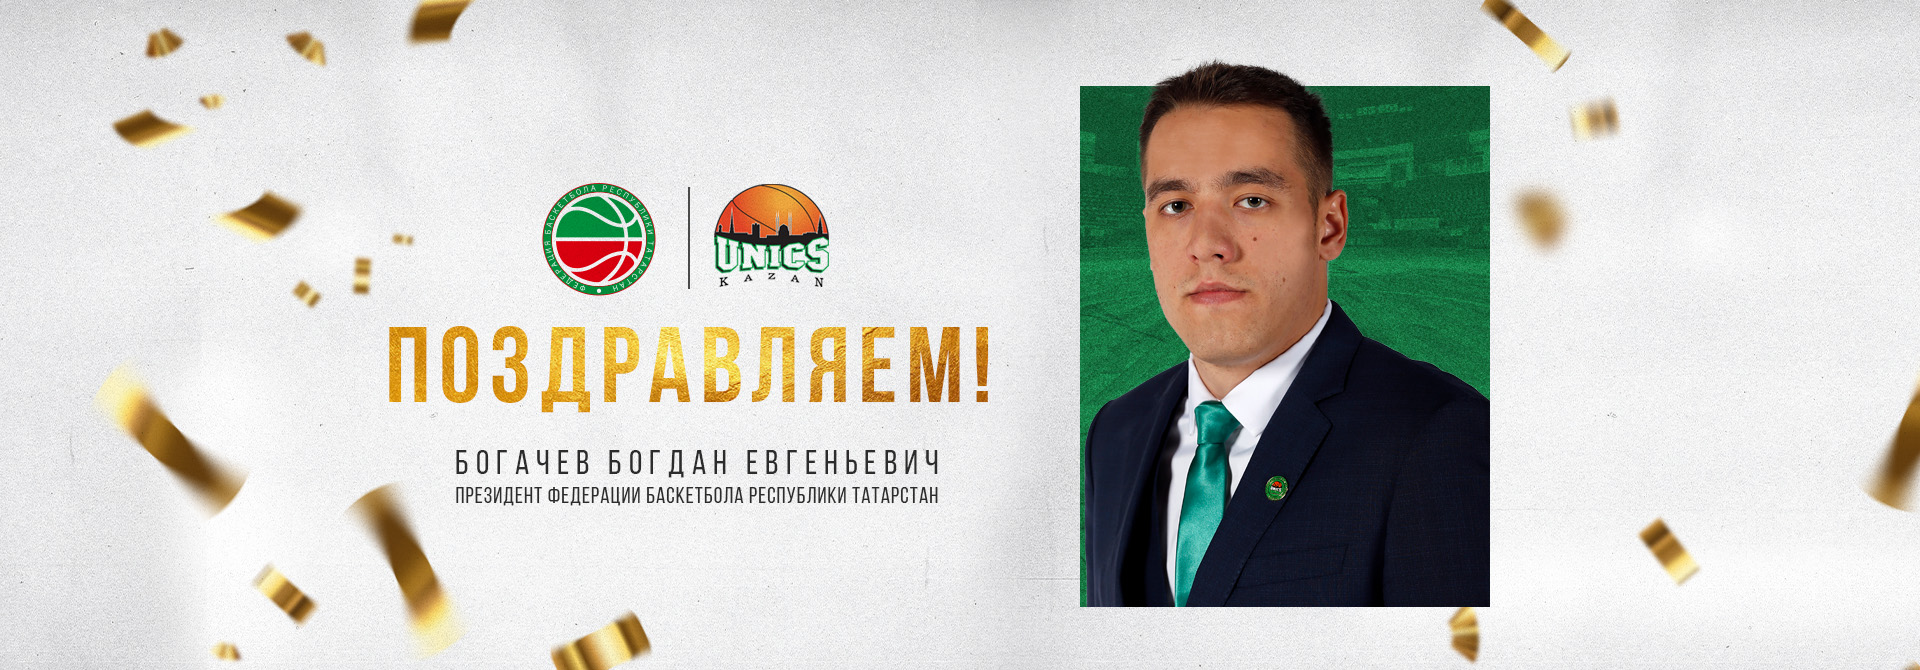 Богдан Богачев избран Президентом Федерации баскетбола Татарстана